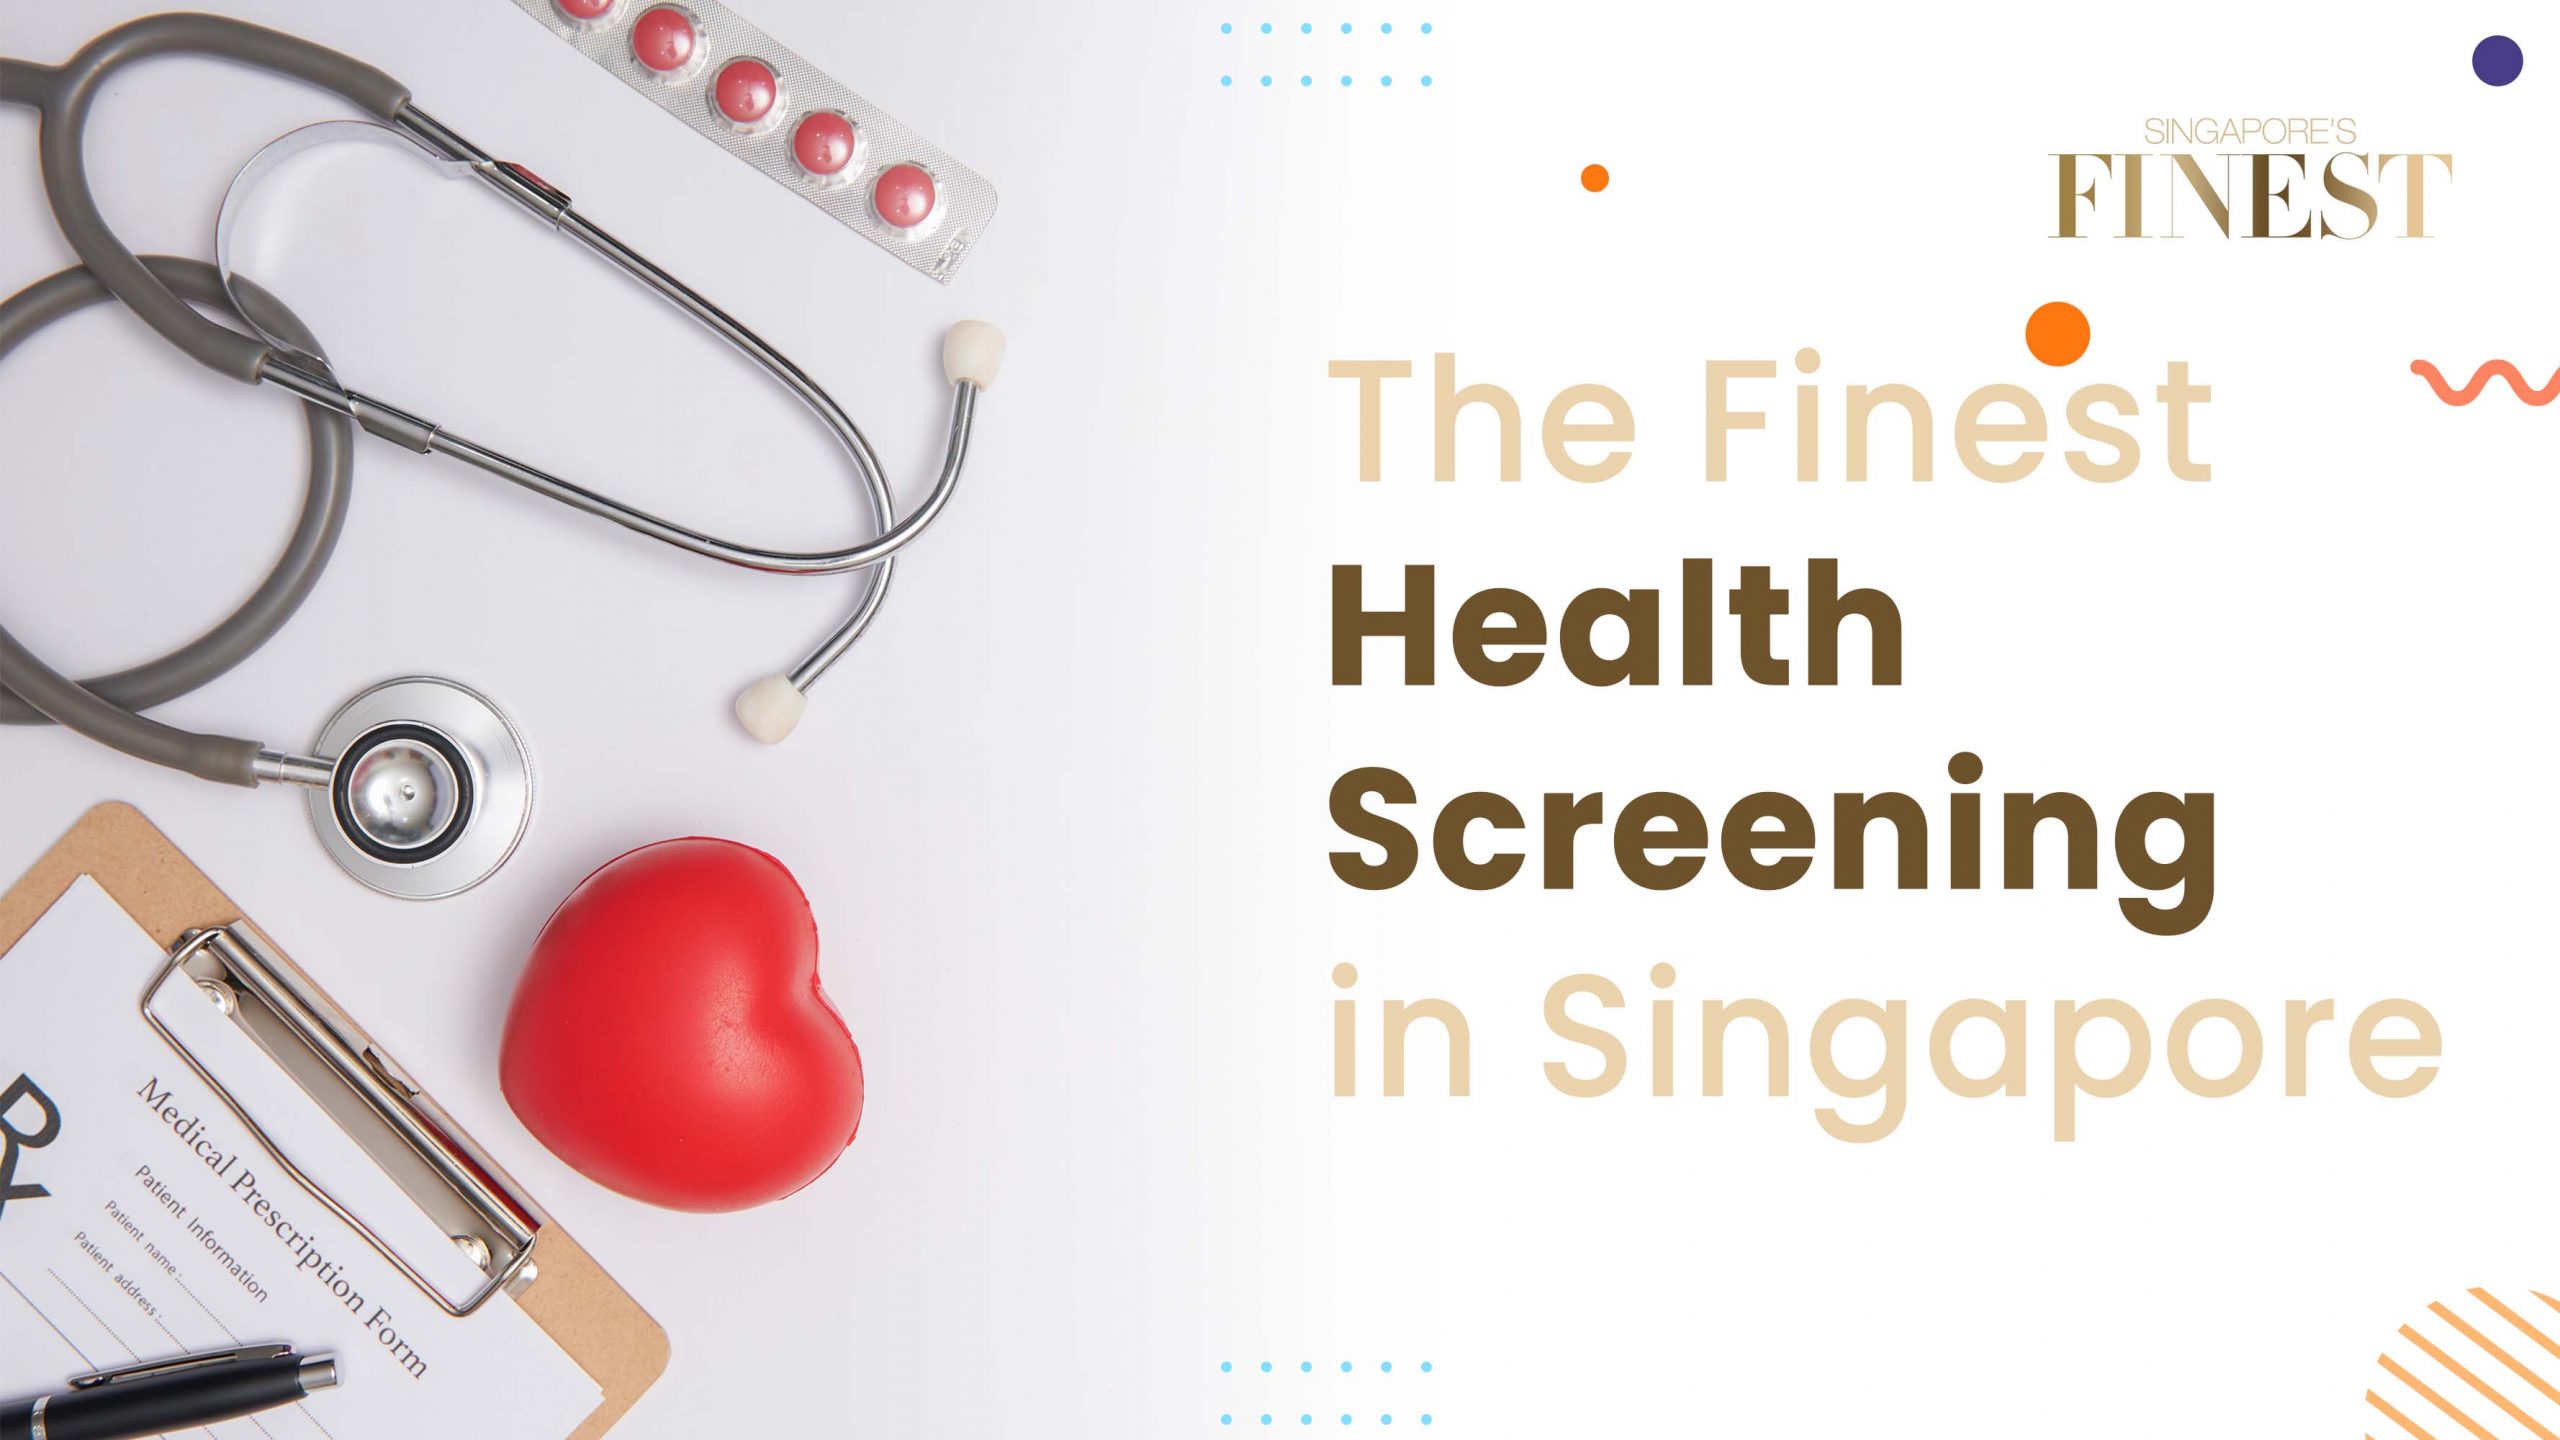 Health Screening